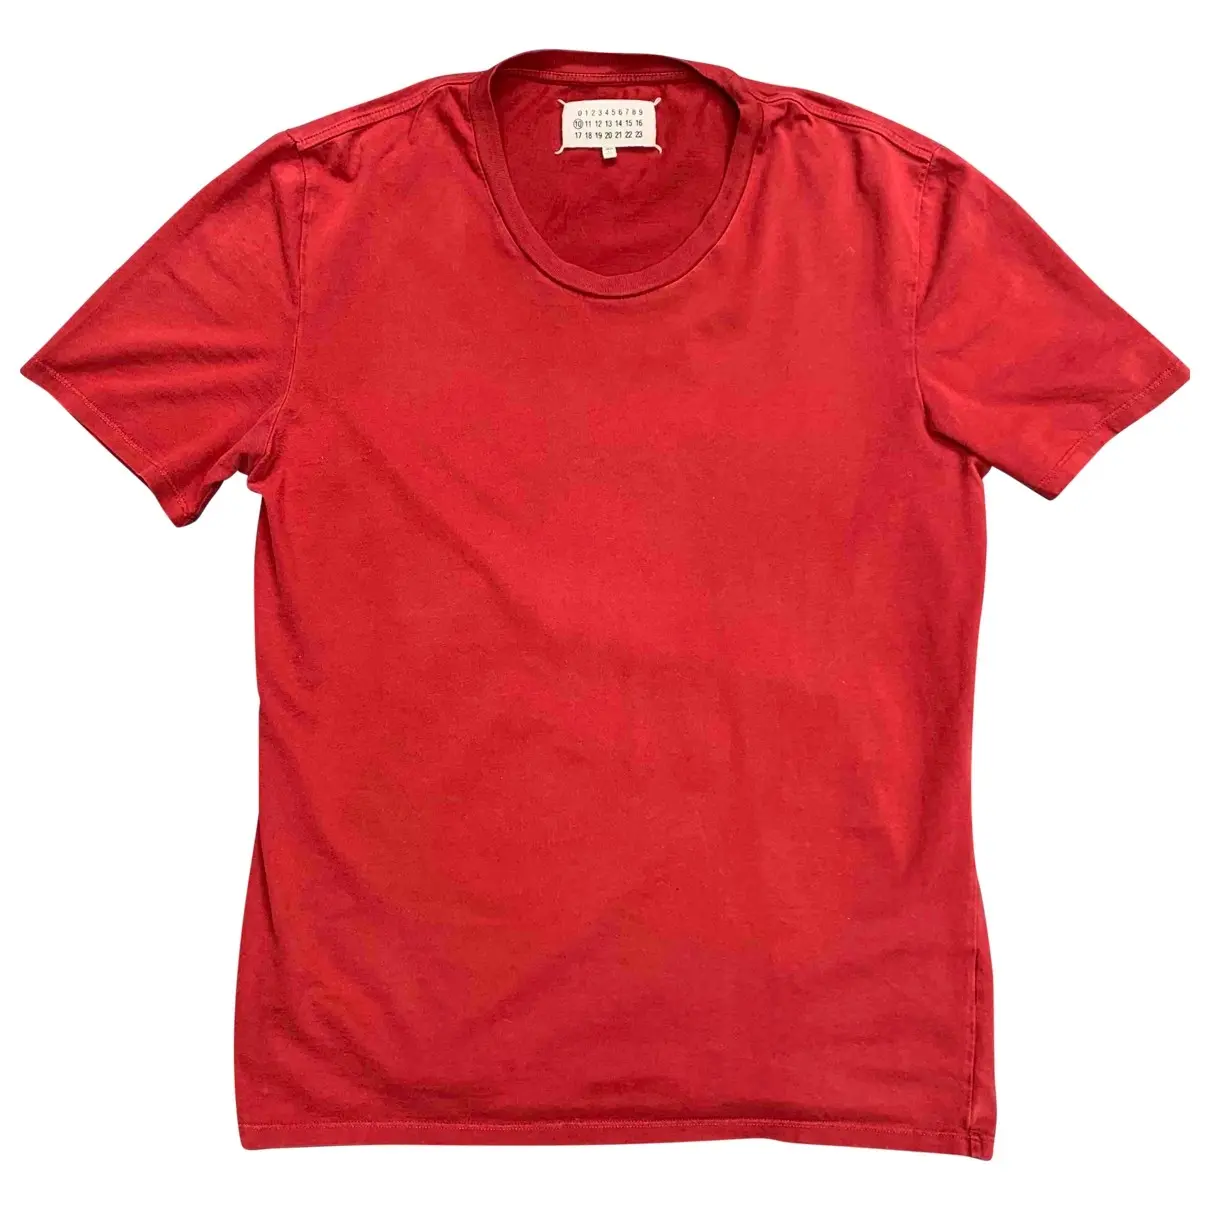 Red Cotton T-shirt Maison Martin Margiela